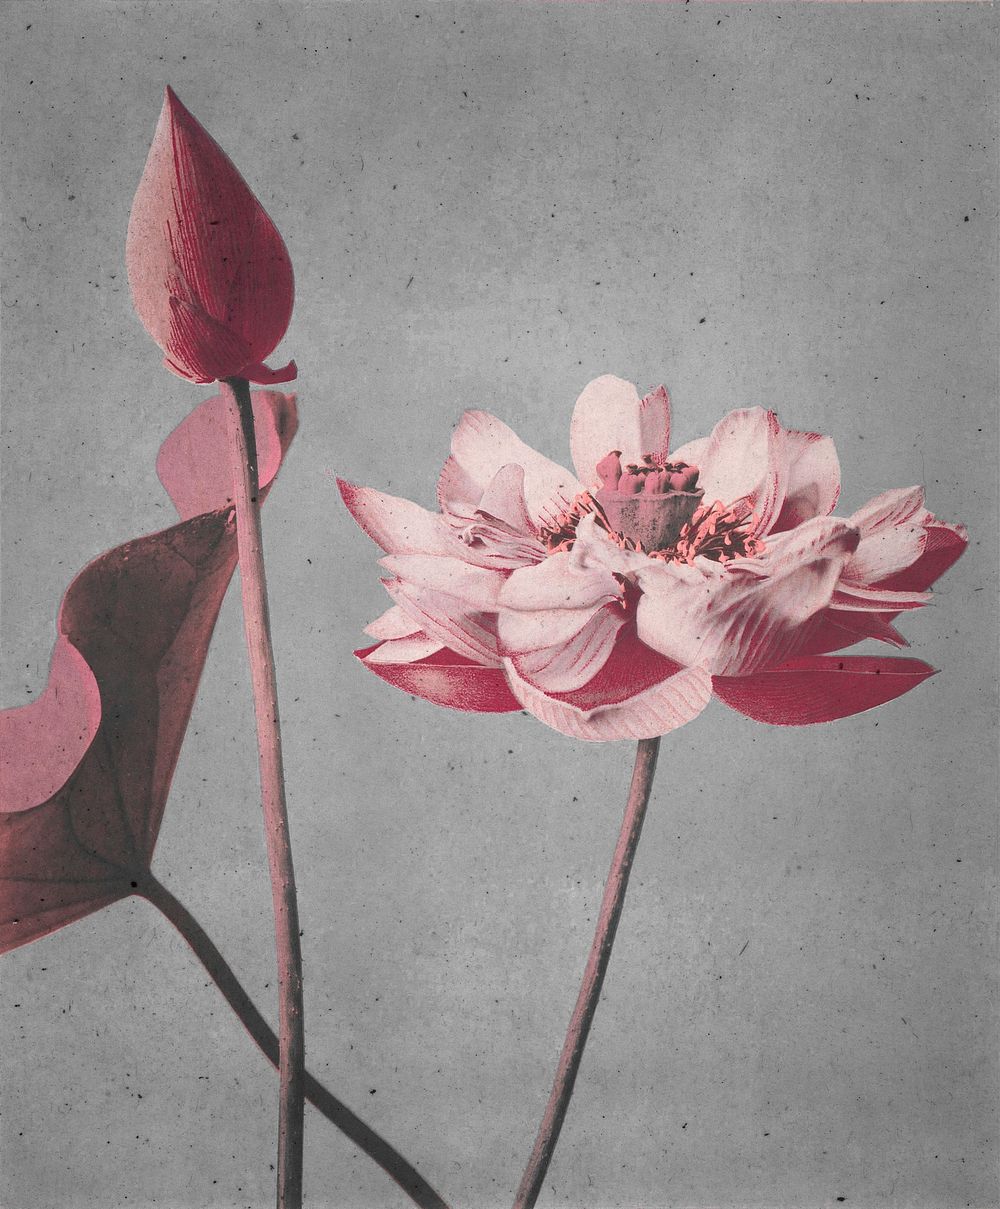 Pink lotus flowers artwork design, remix from original photography by Ogawa Kazumasa.